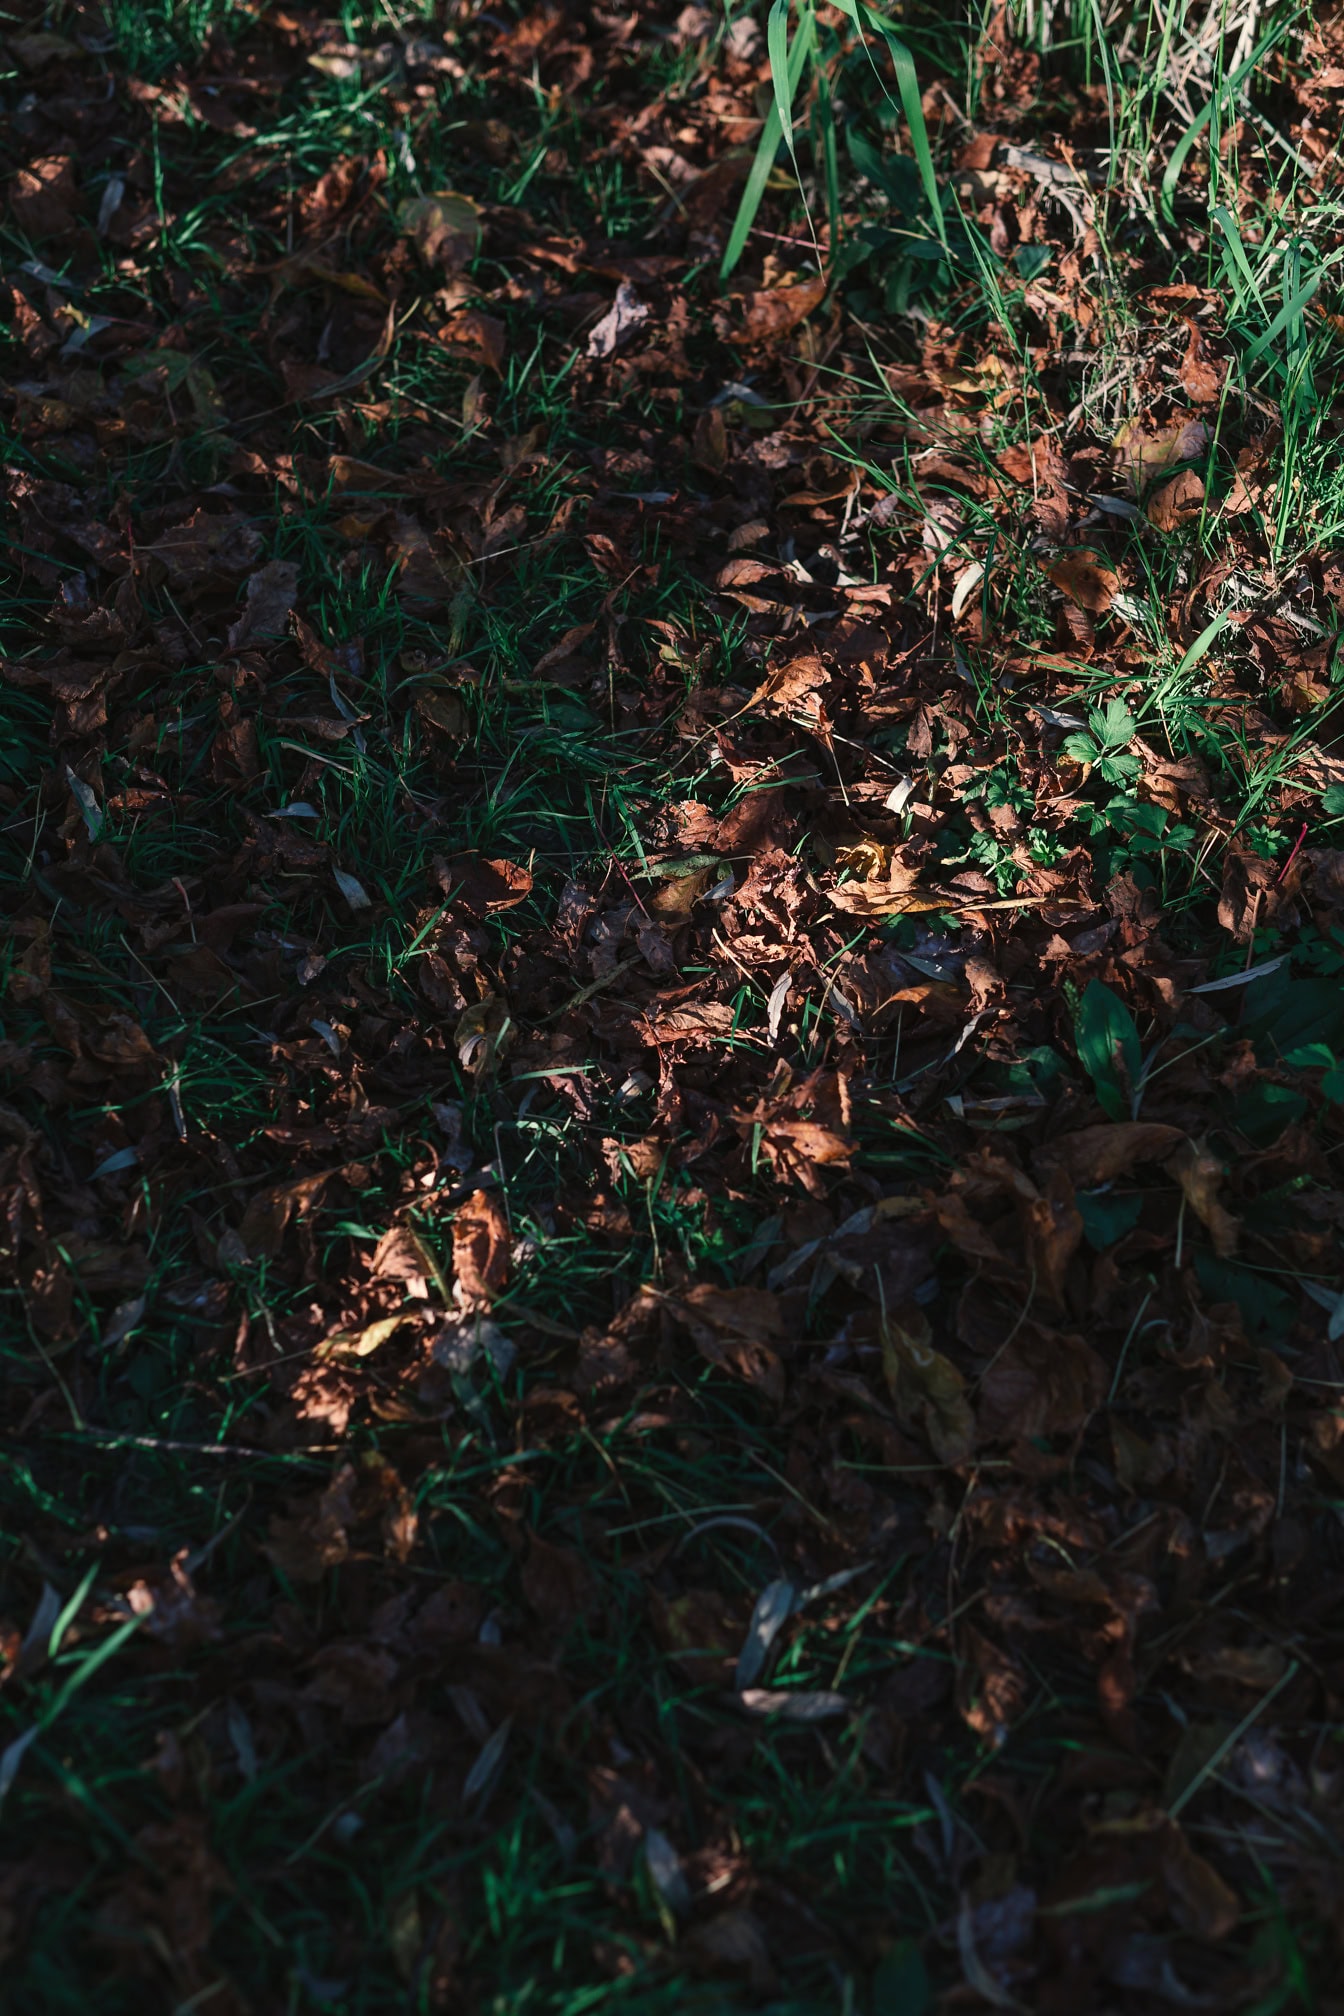 Foglie marroni secche a terra tra l’erba verde